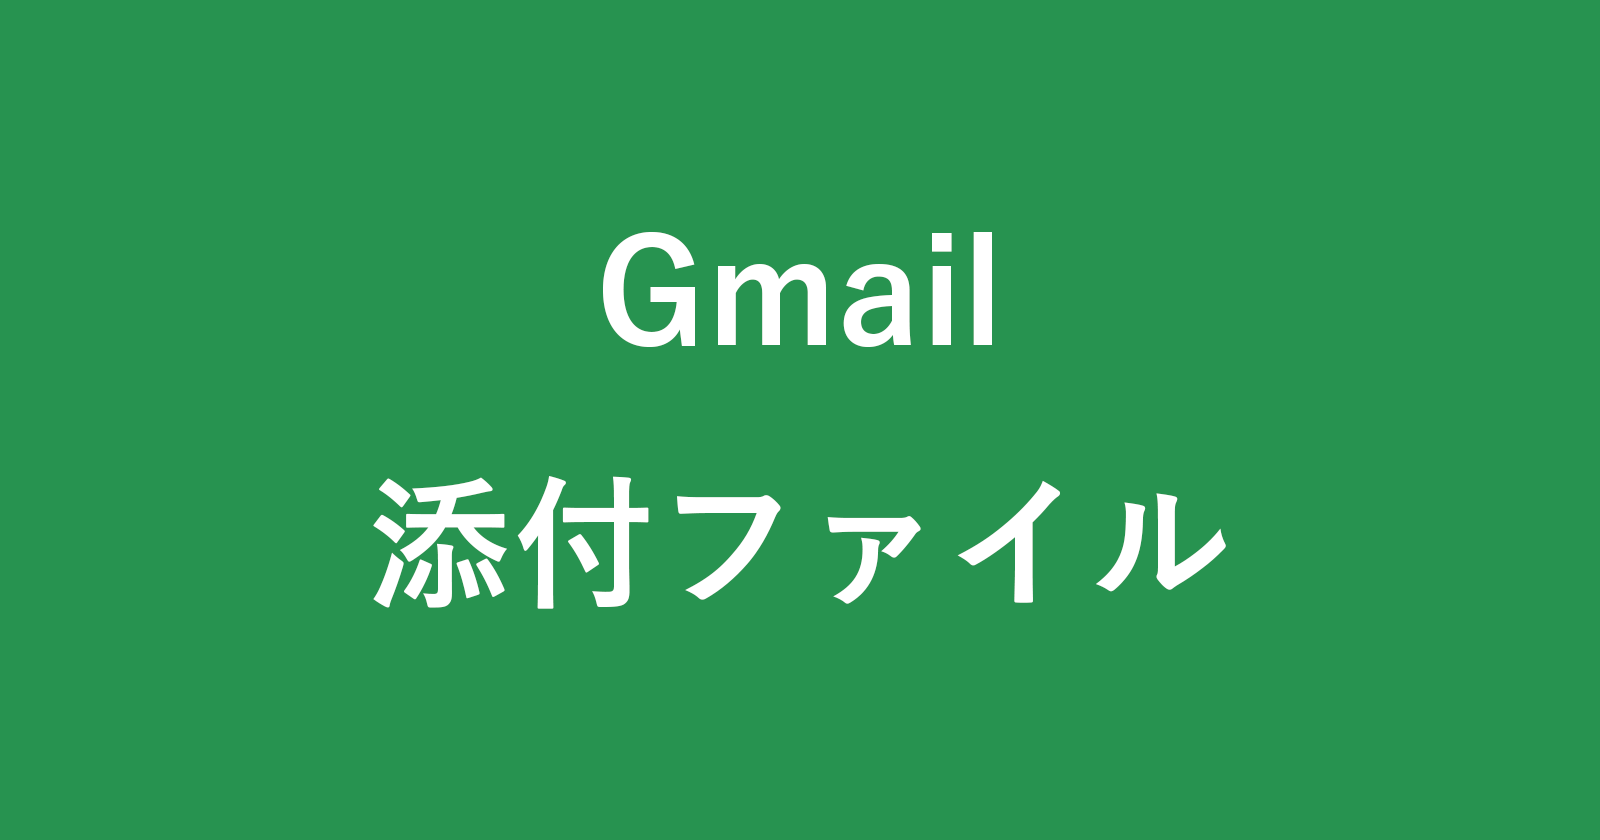 google gmail attackment